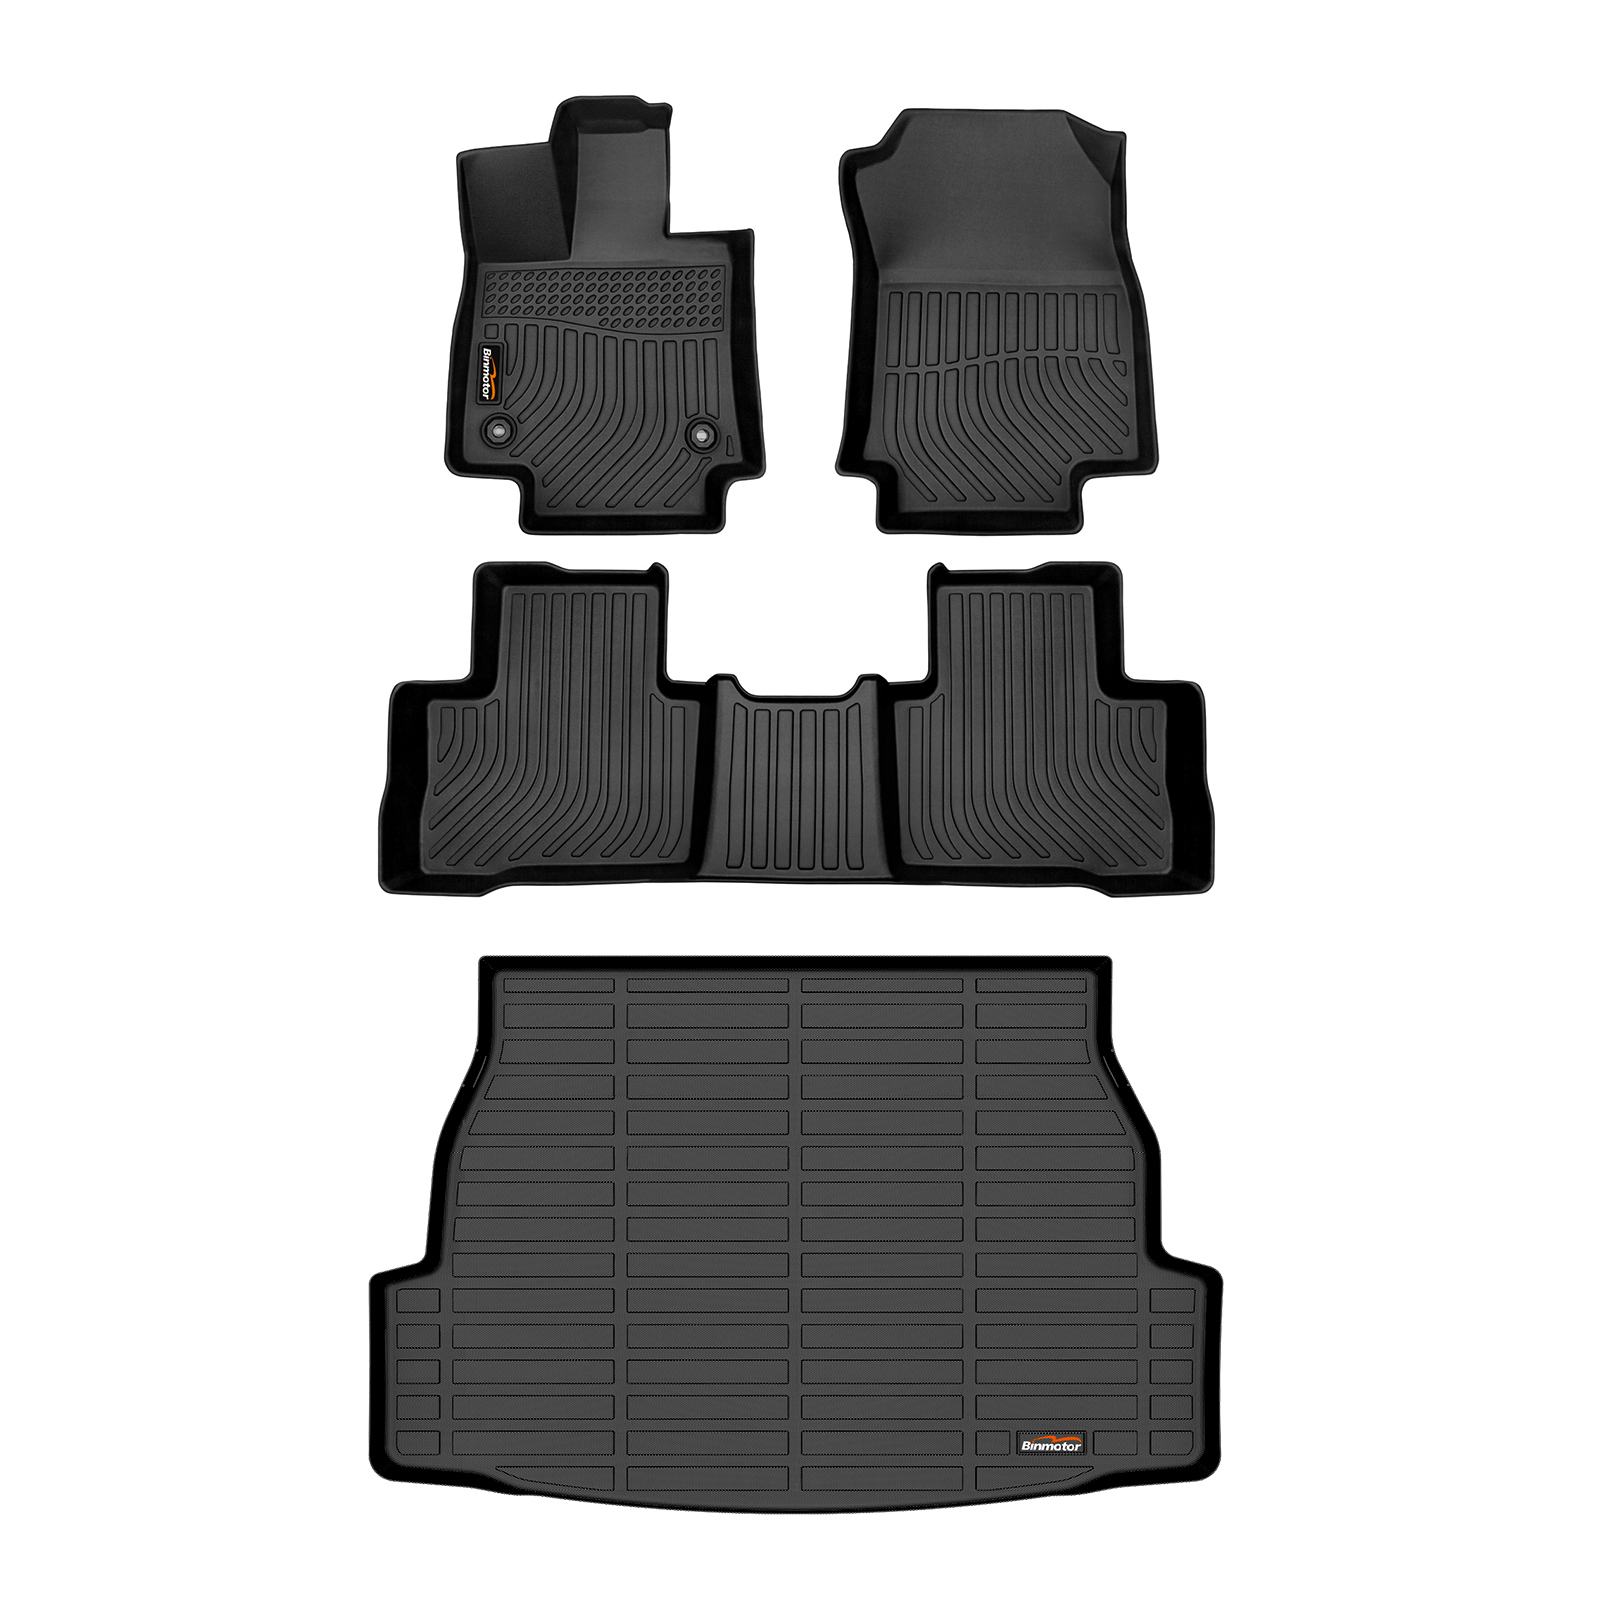 Binmotor-Floor Mats & Cargo Liner Set for Toyota RAV4 Hybrid,1st & 2nd Row Full Set, Heavy Duty Car Floor Liners-Black RAV4 Hybrid Accessories（compatible year 2019-2024）